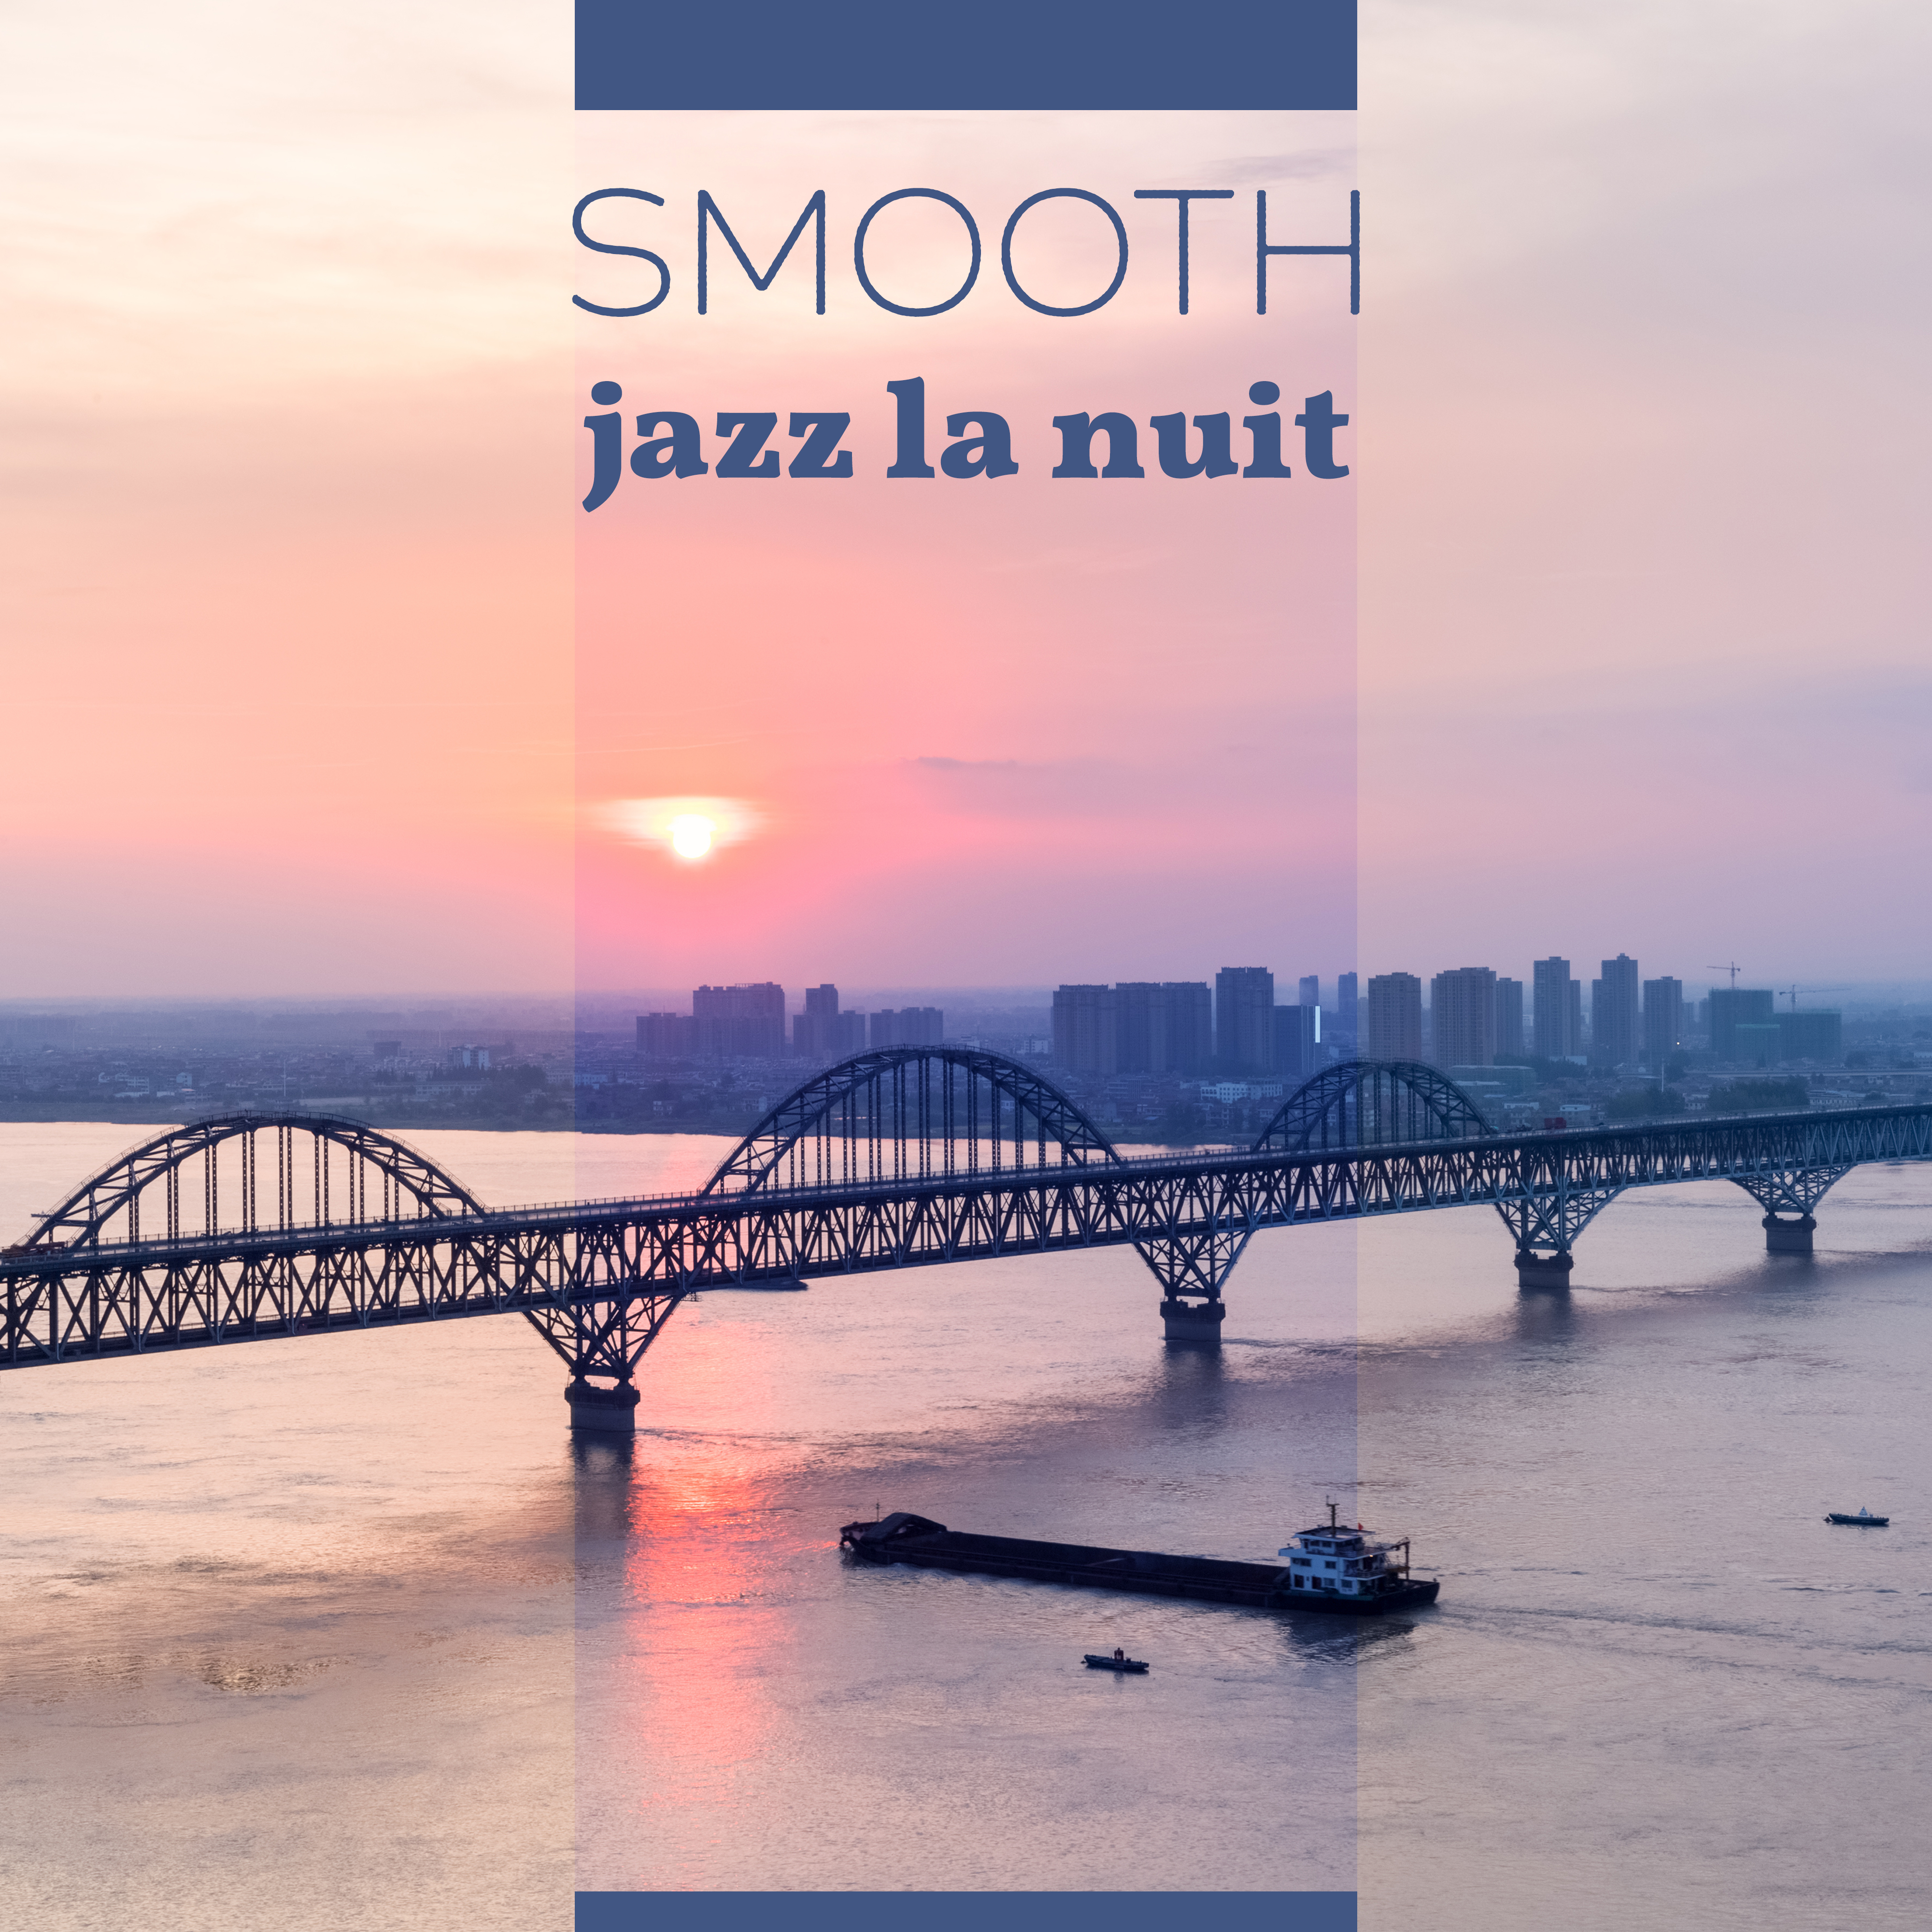 Smooth jazz la nuit